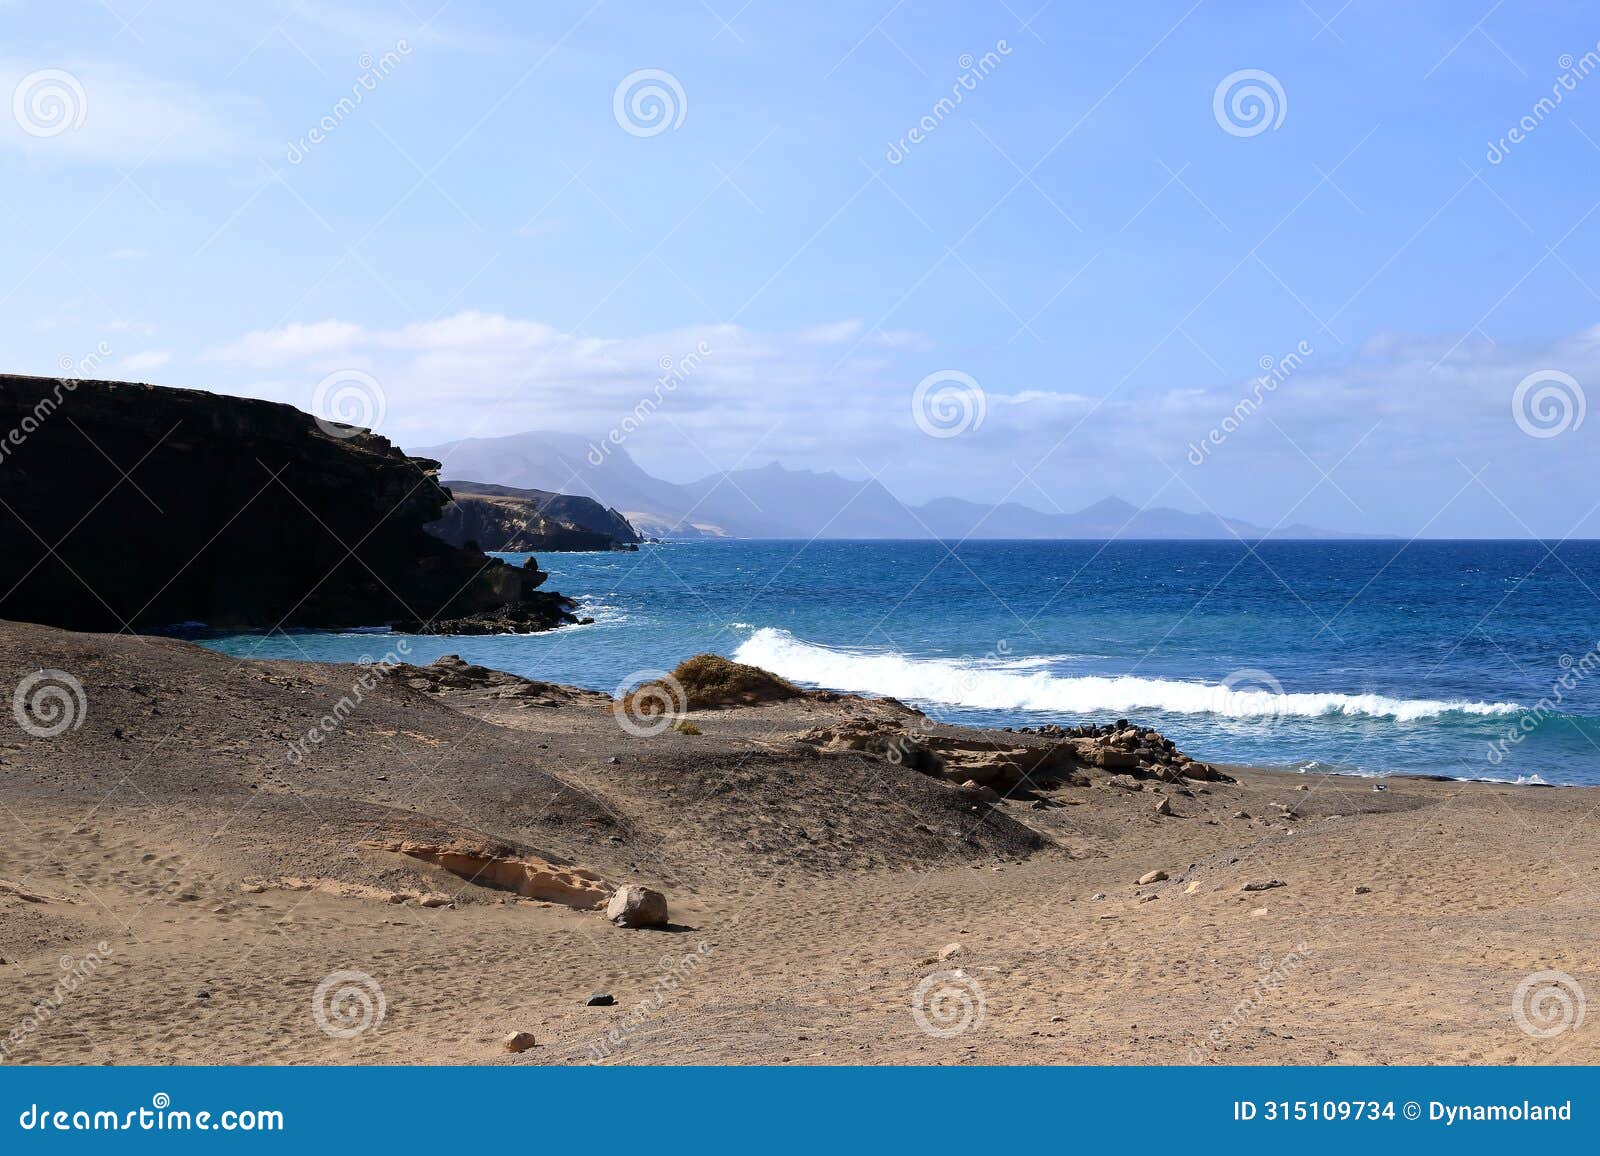 the coast landscape and beach la pared, fuerteventura, canary islands, spain